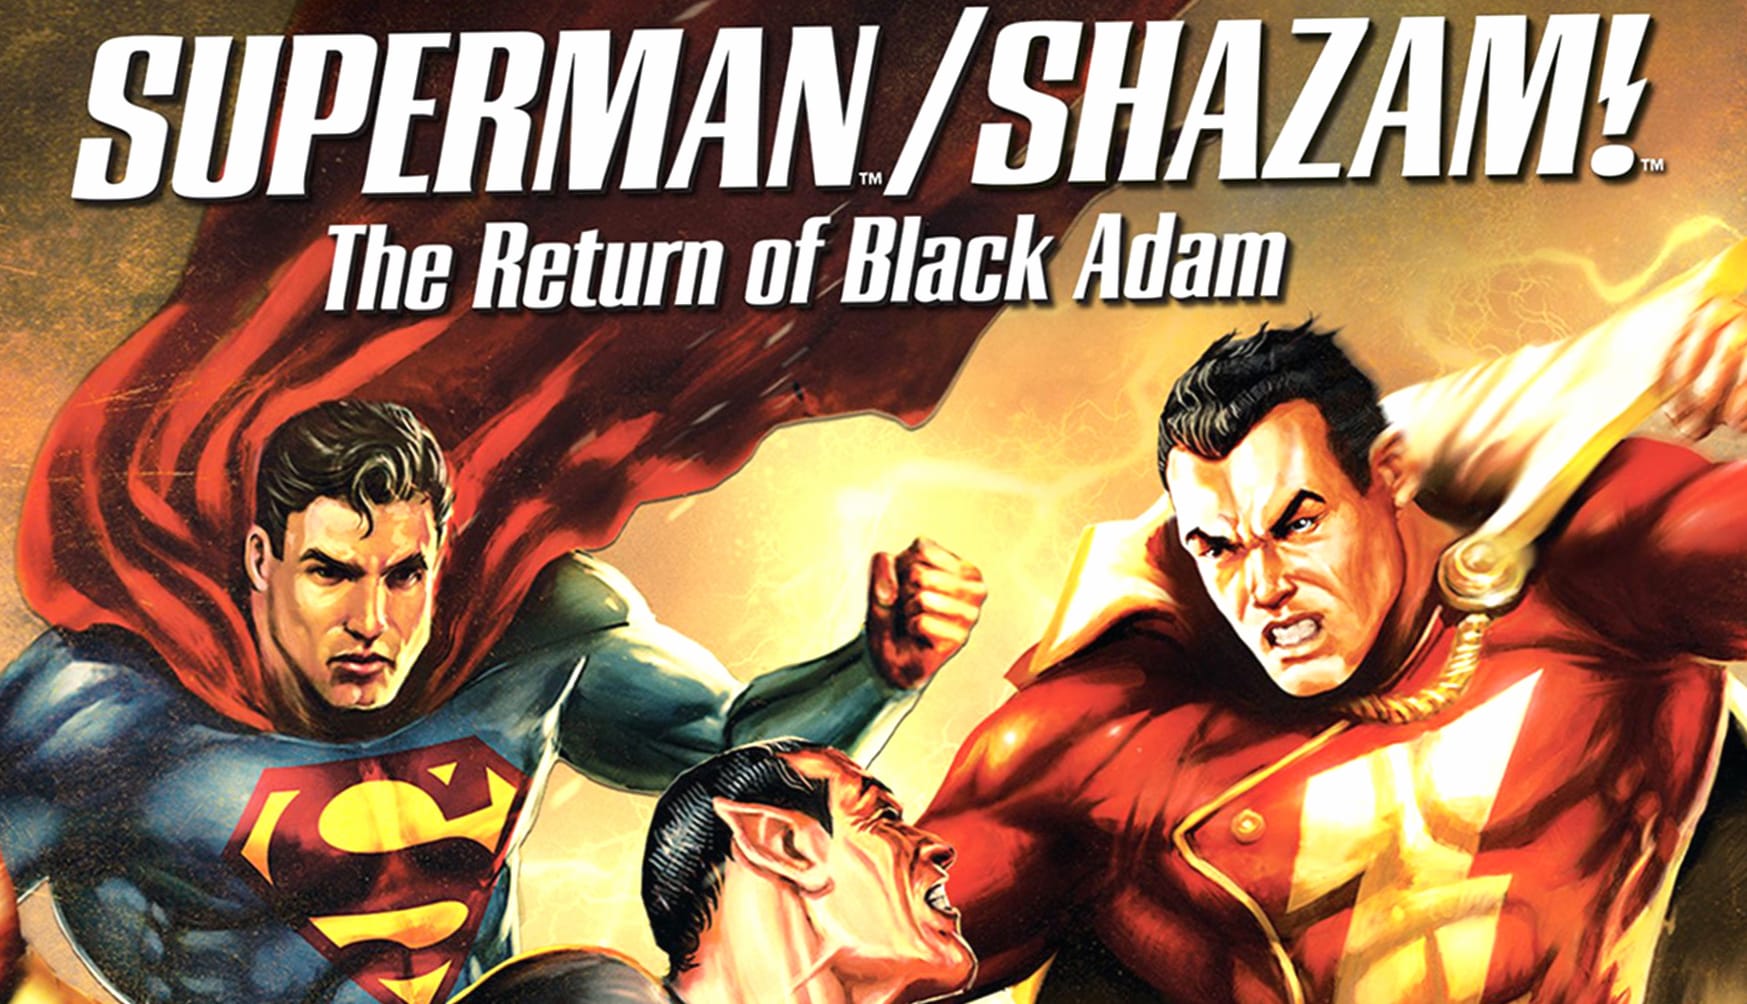 Superman Shazam! The Return of Black Adam at 1024 x 1024 iPad size wallpapers HD quality